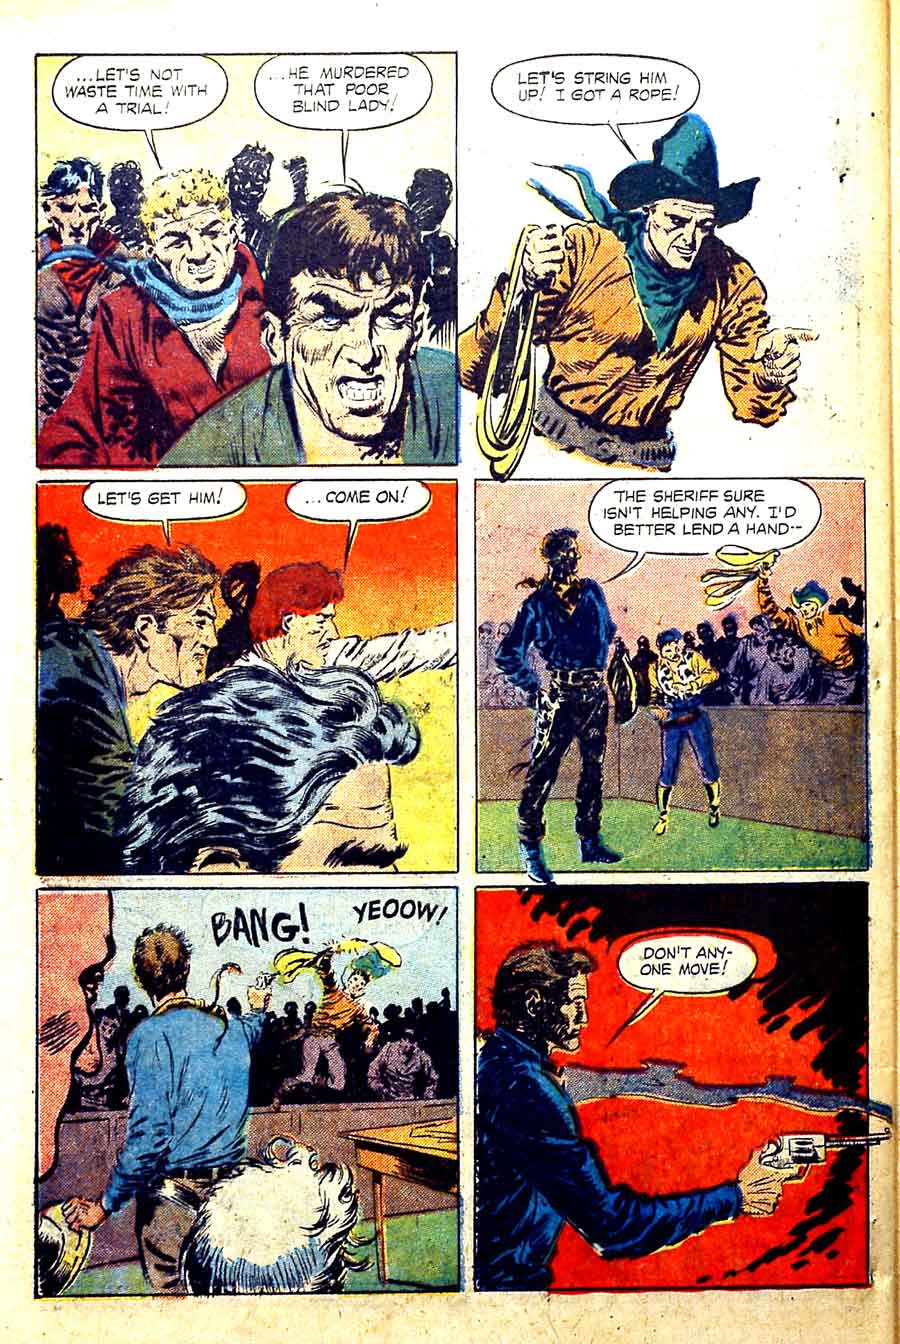 John Wayne Adventure Comics #6 golden age 1950s western comic book page art by Al Williamson / Frank Frazetta